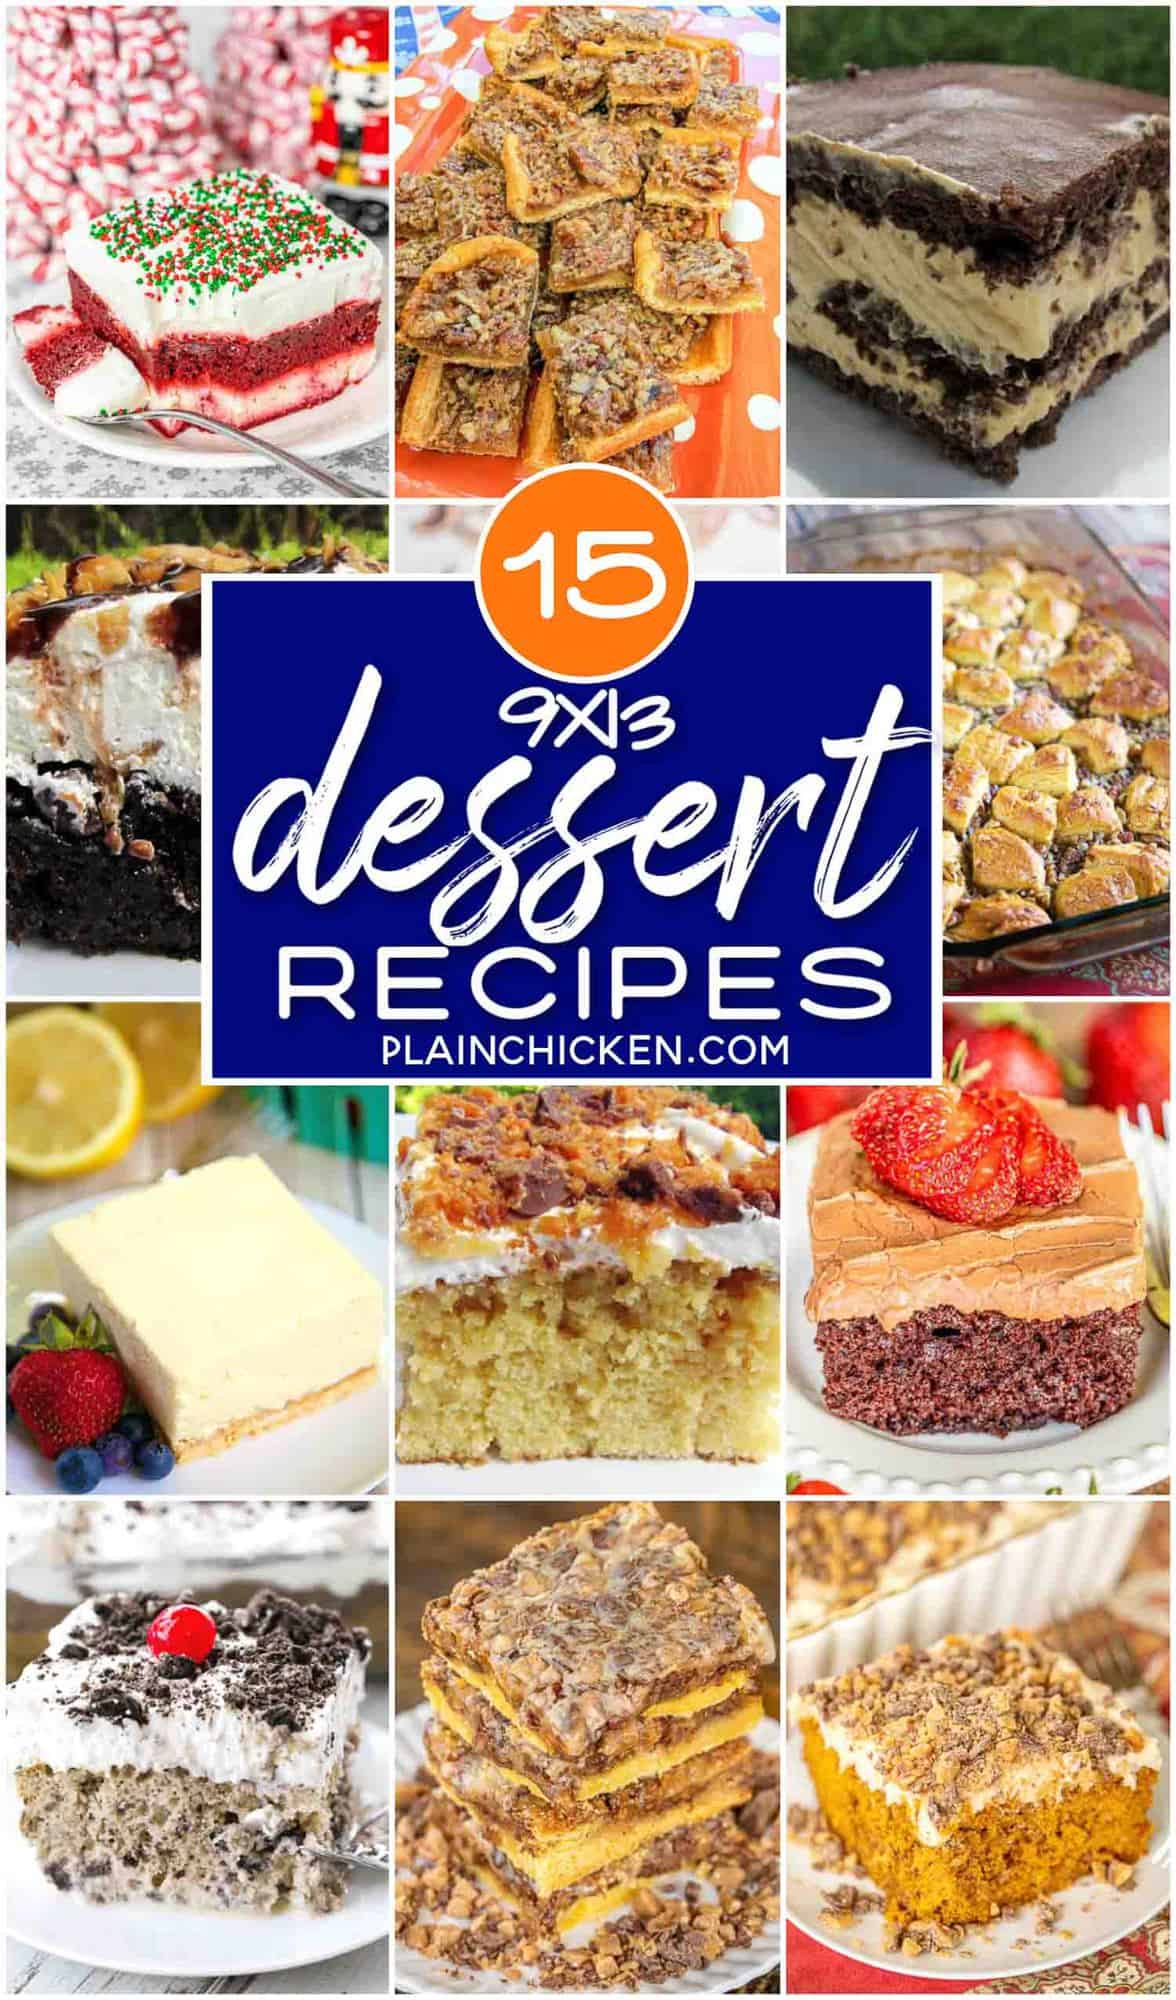 9x13 Dessert Recipes - Plain Chicken